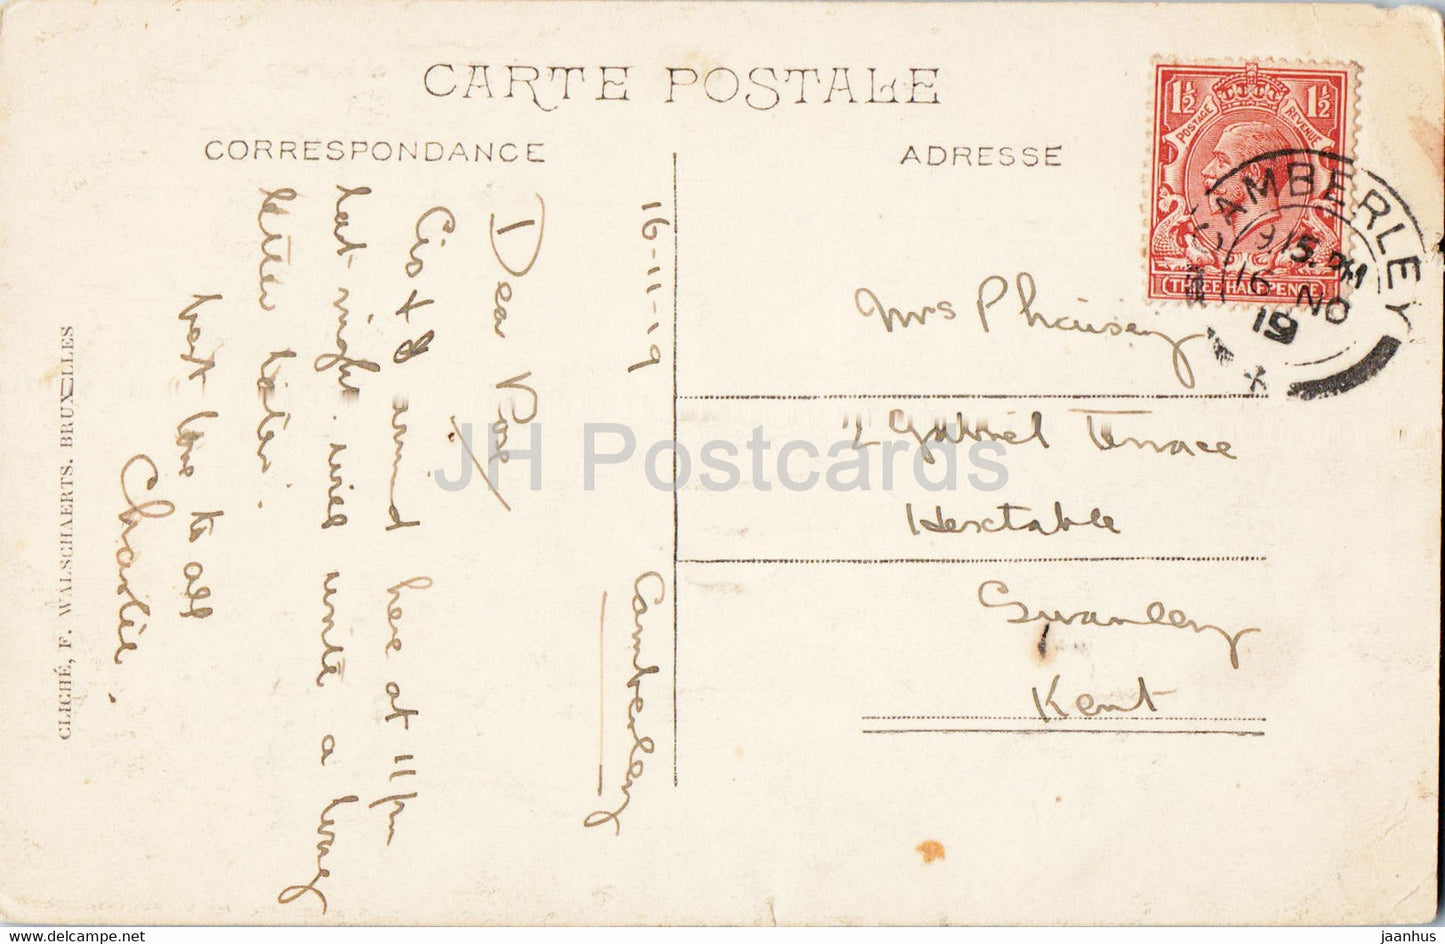 Ostende - Oostende - Le Kursaal et la Plage - beach - 84 - old postcard - 1919 - Belgium - used